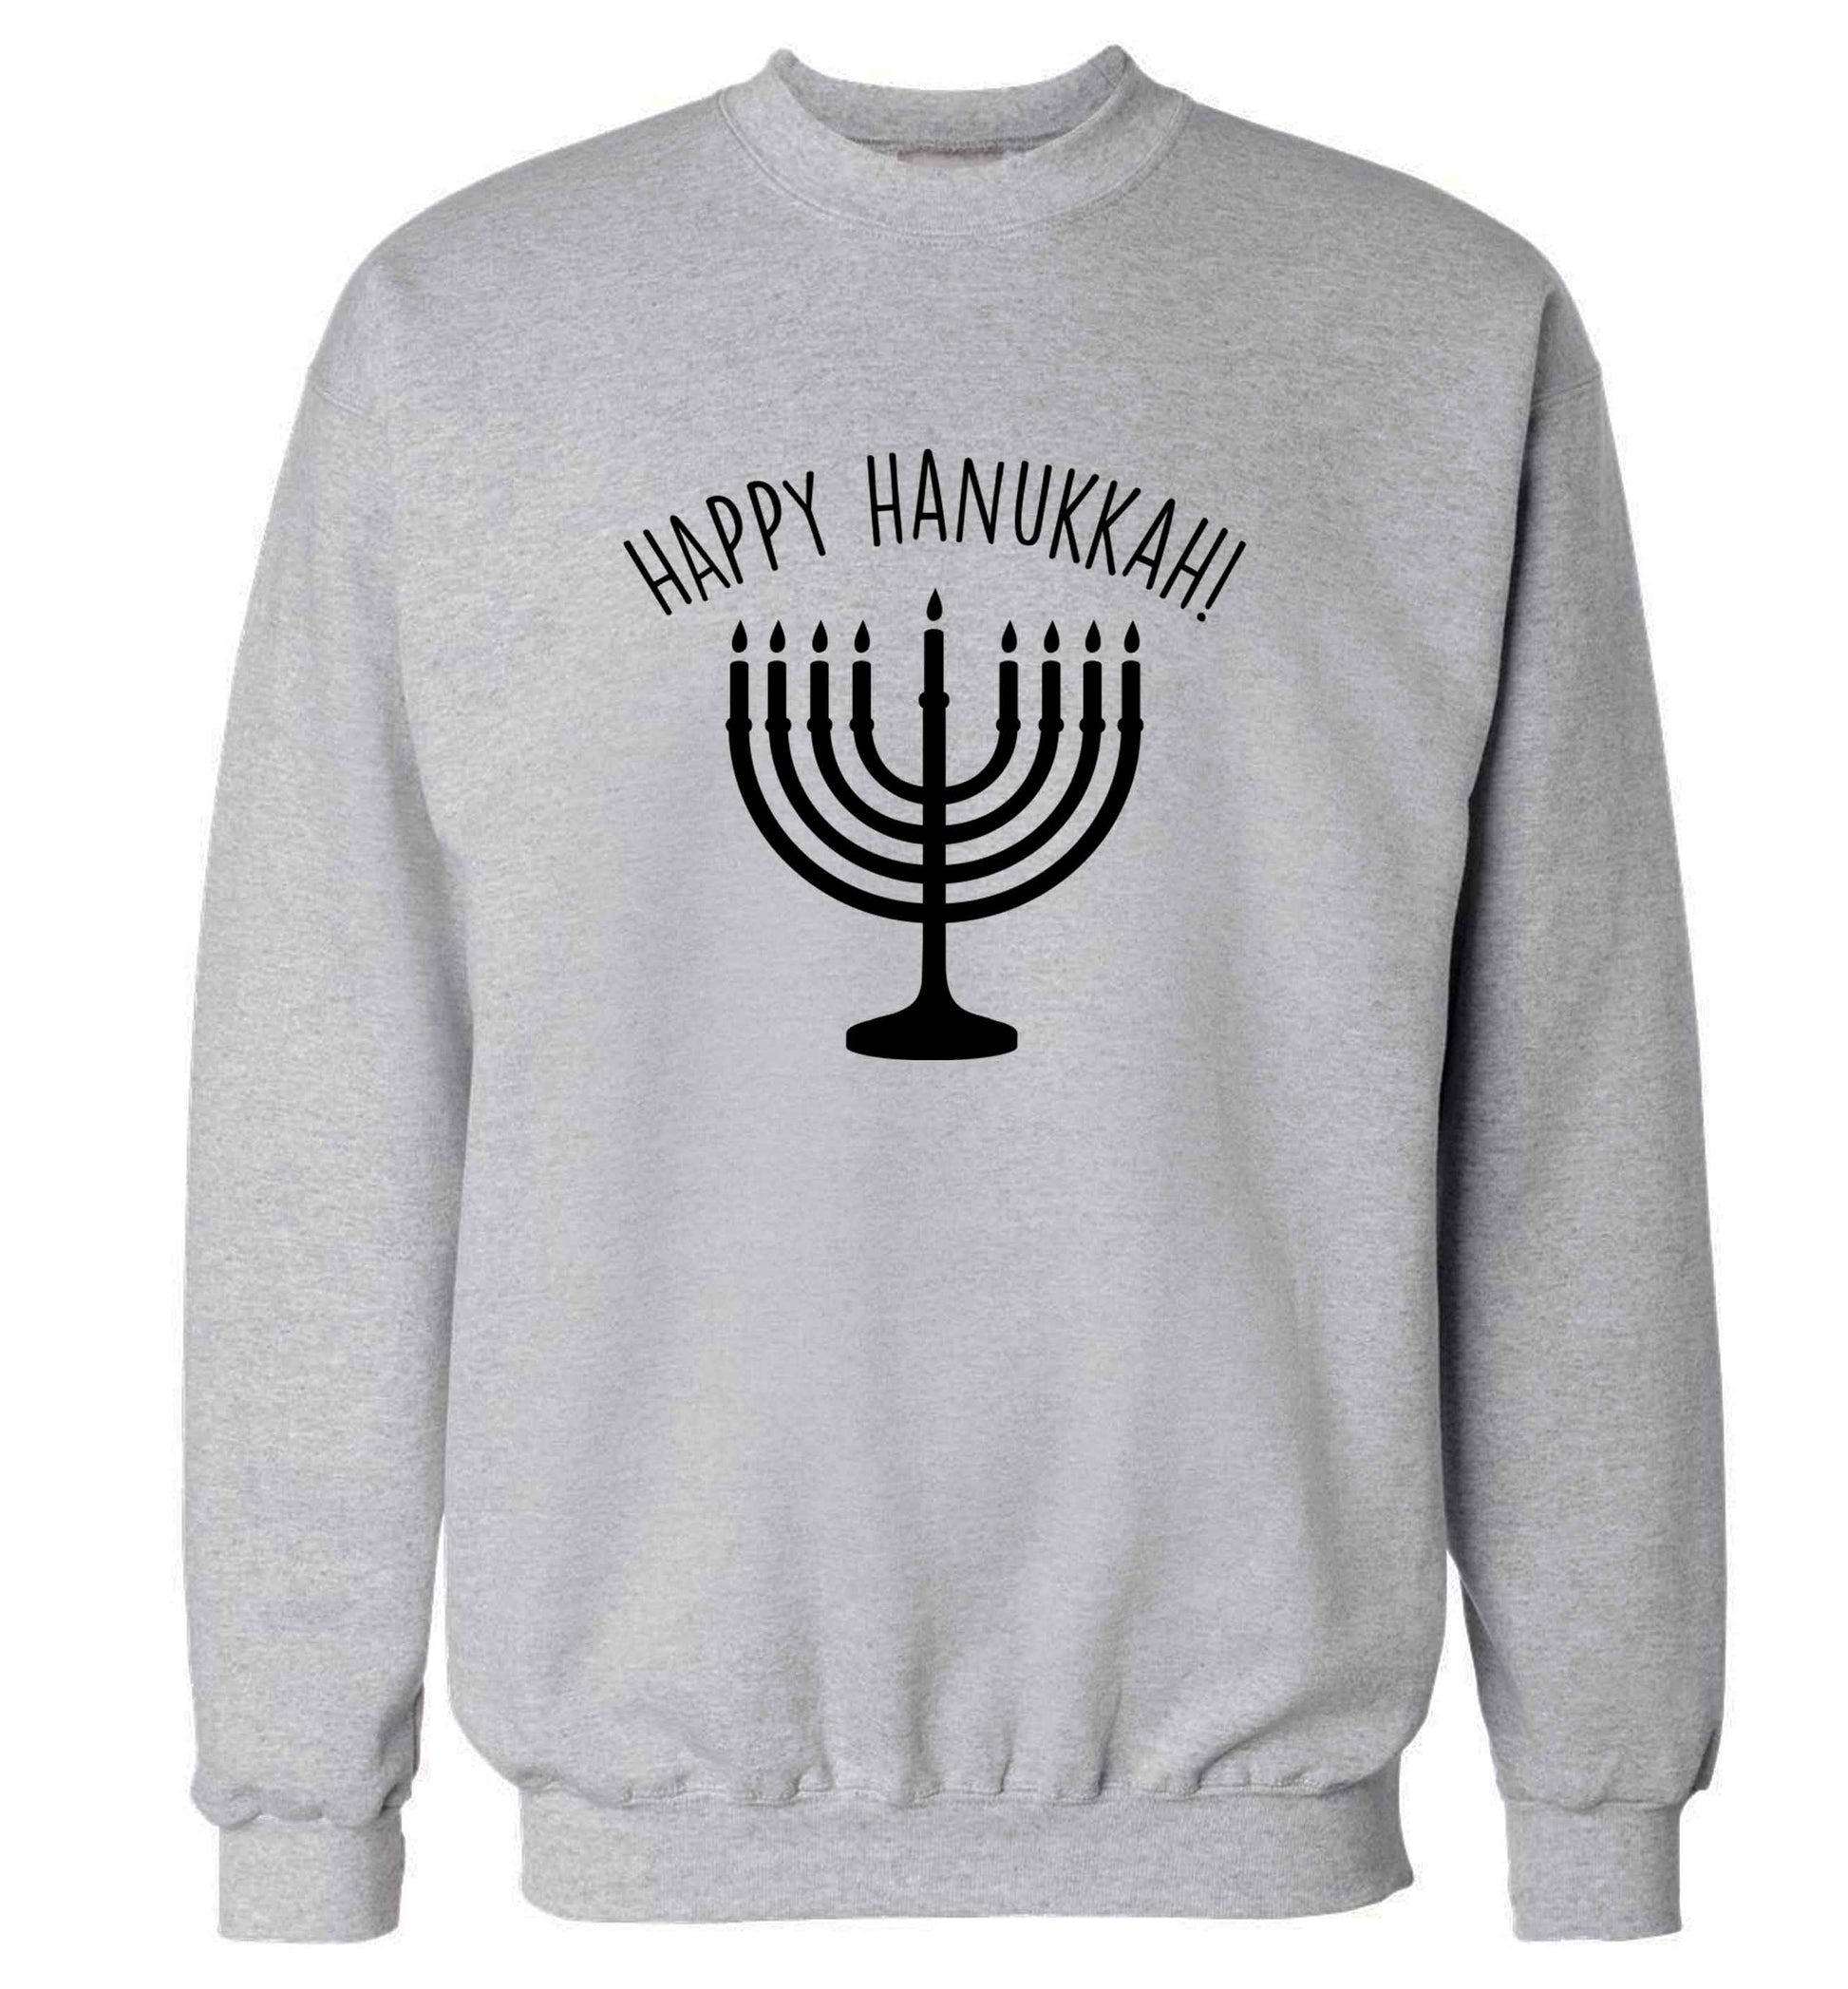 Happy hanukkah adult's unisex grey sweater 2XL